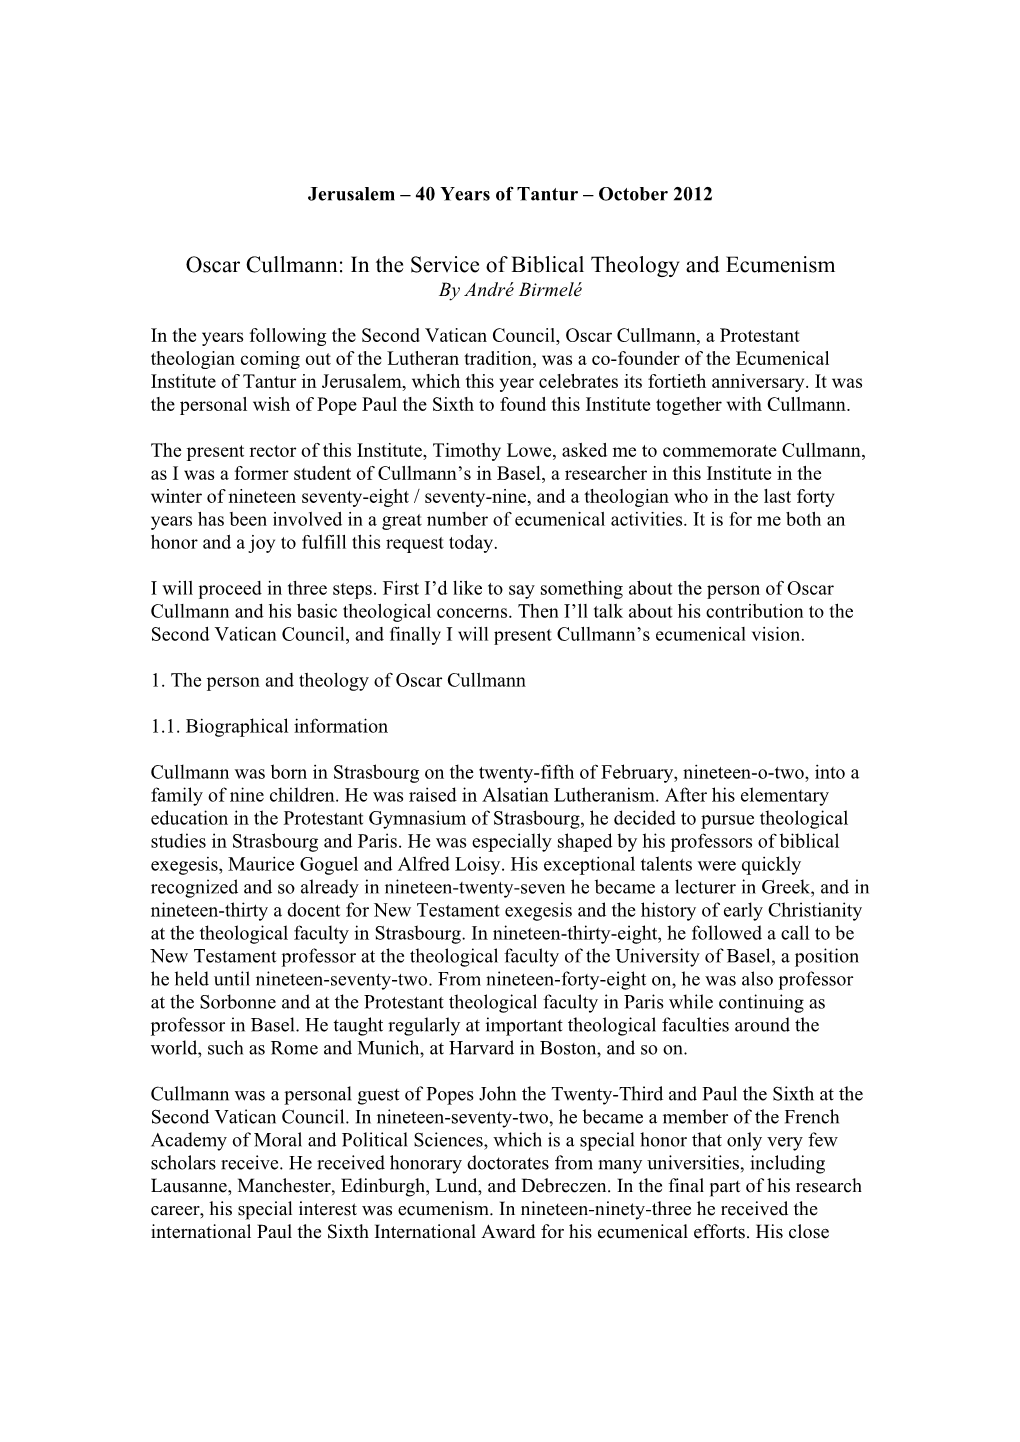 Oscar Cullmann: in the Service of Biblical Theology and Ecumenism by André Birmelé